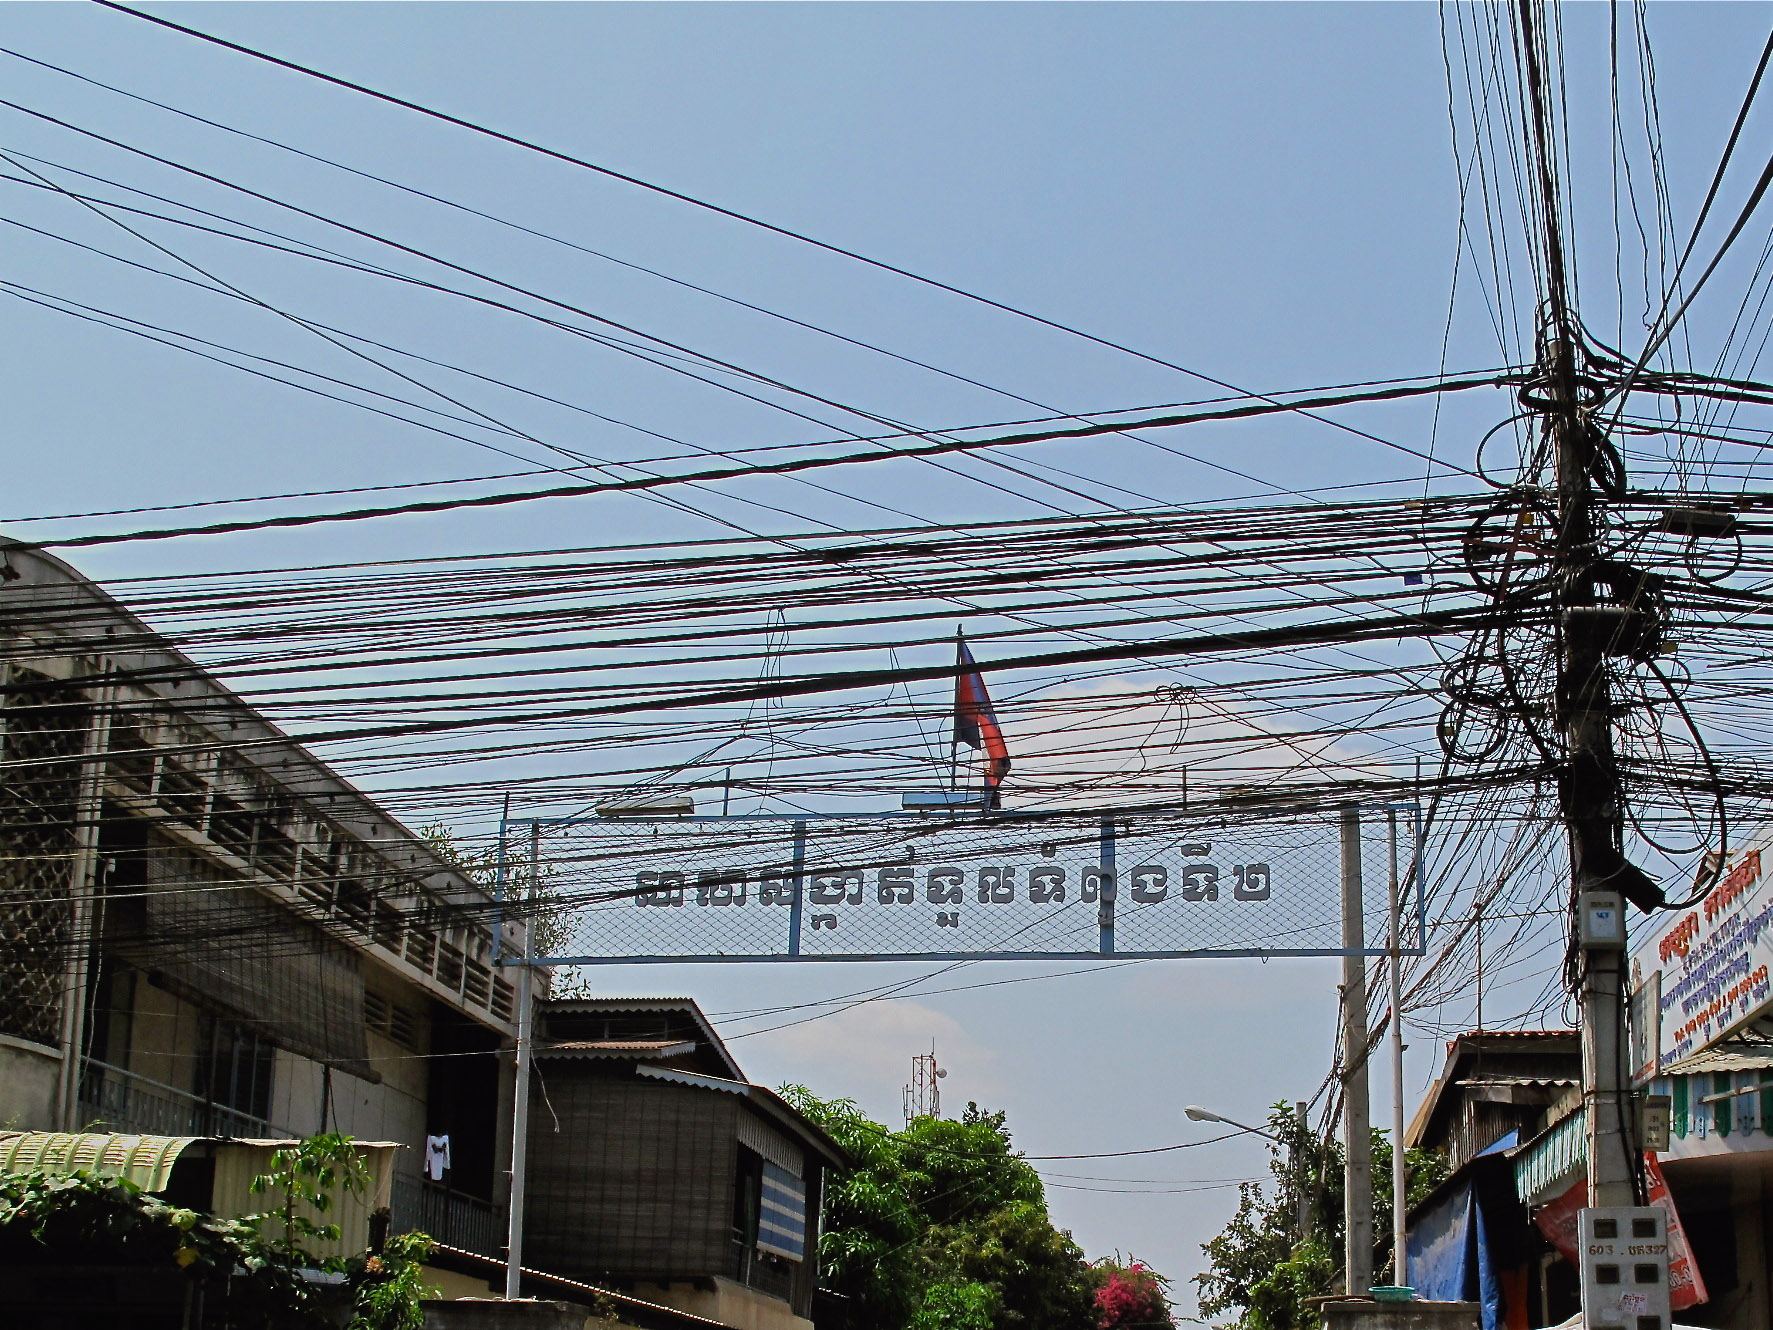 Electricity lines in Phnom Penh, Cambodia